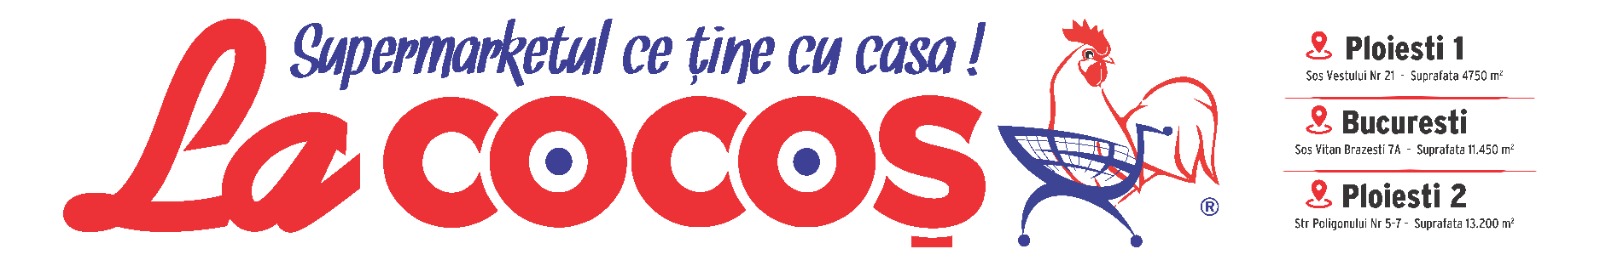 banner supermarket cocos